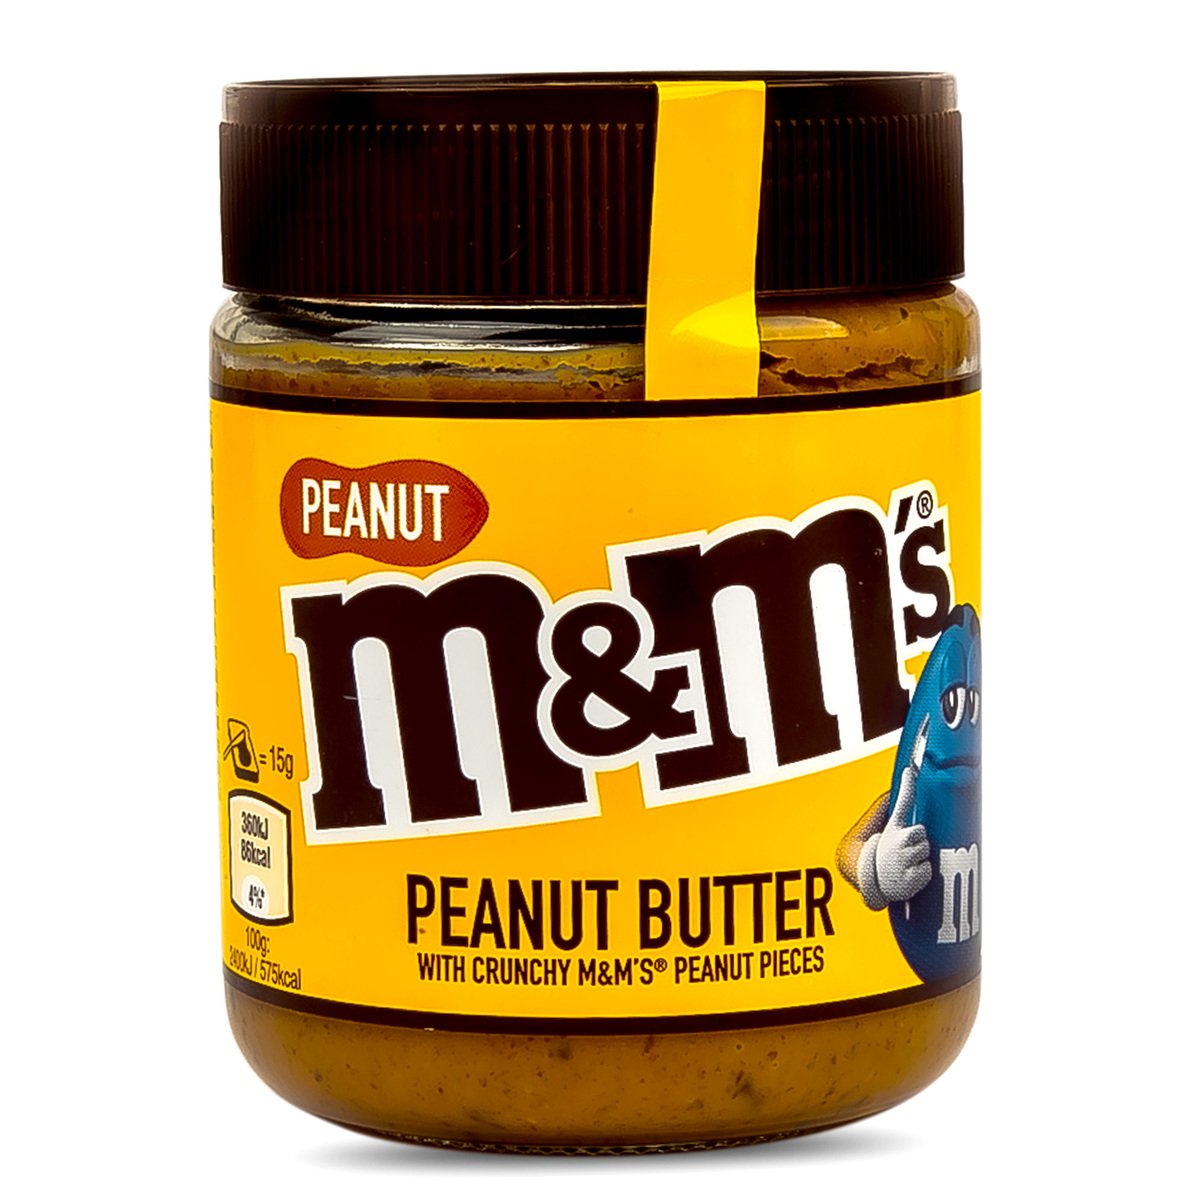 m&m peanut butter spread